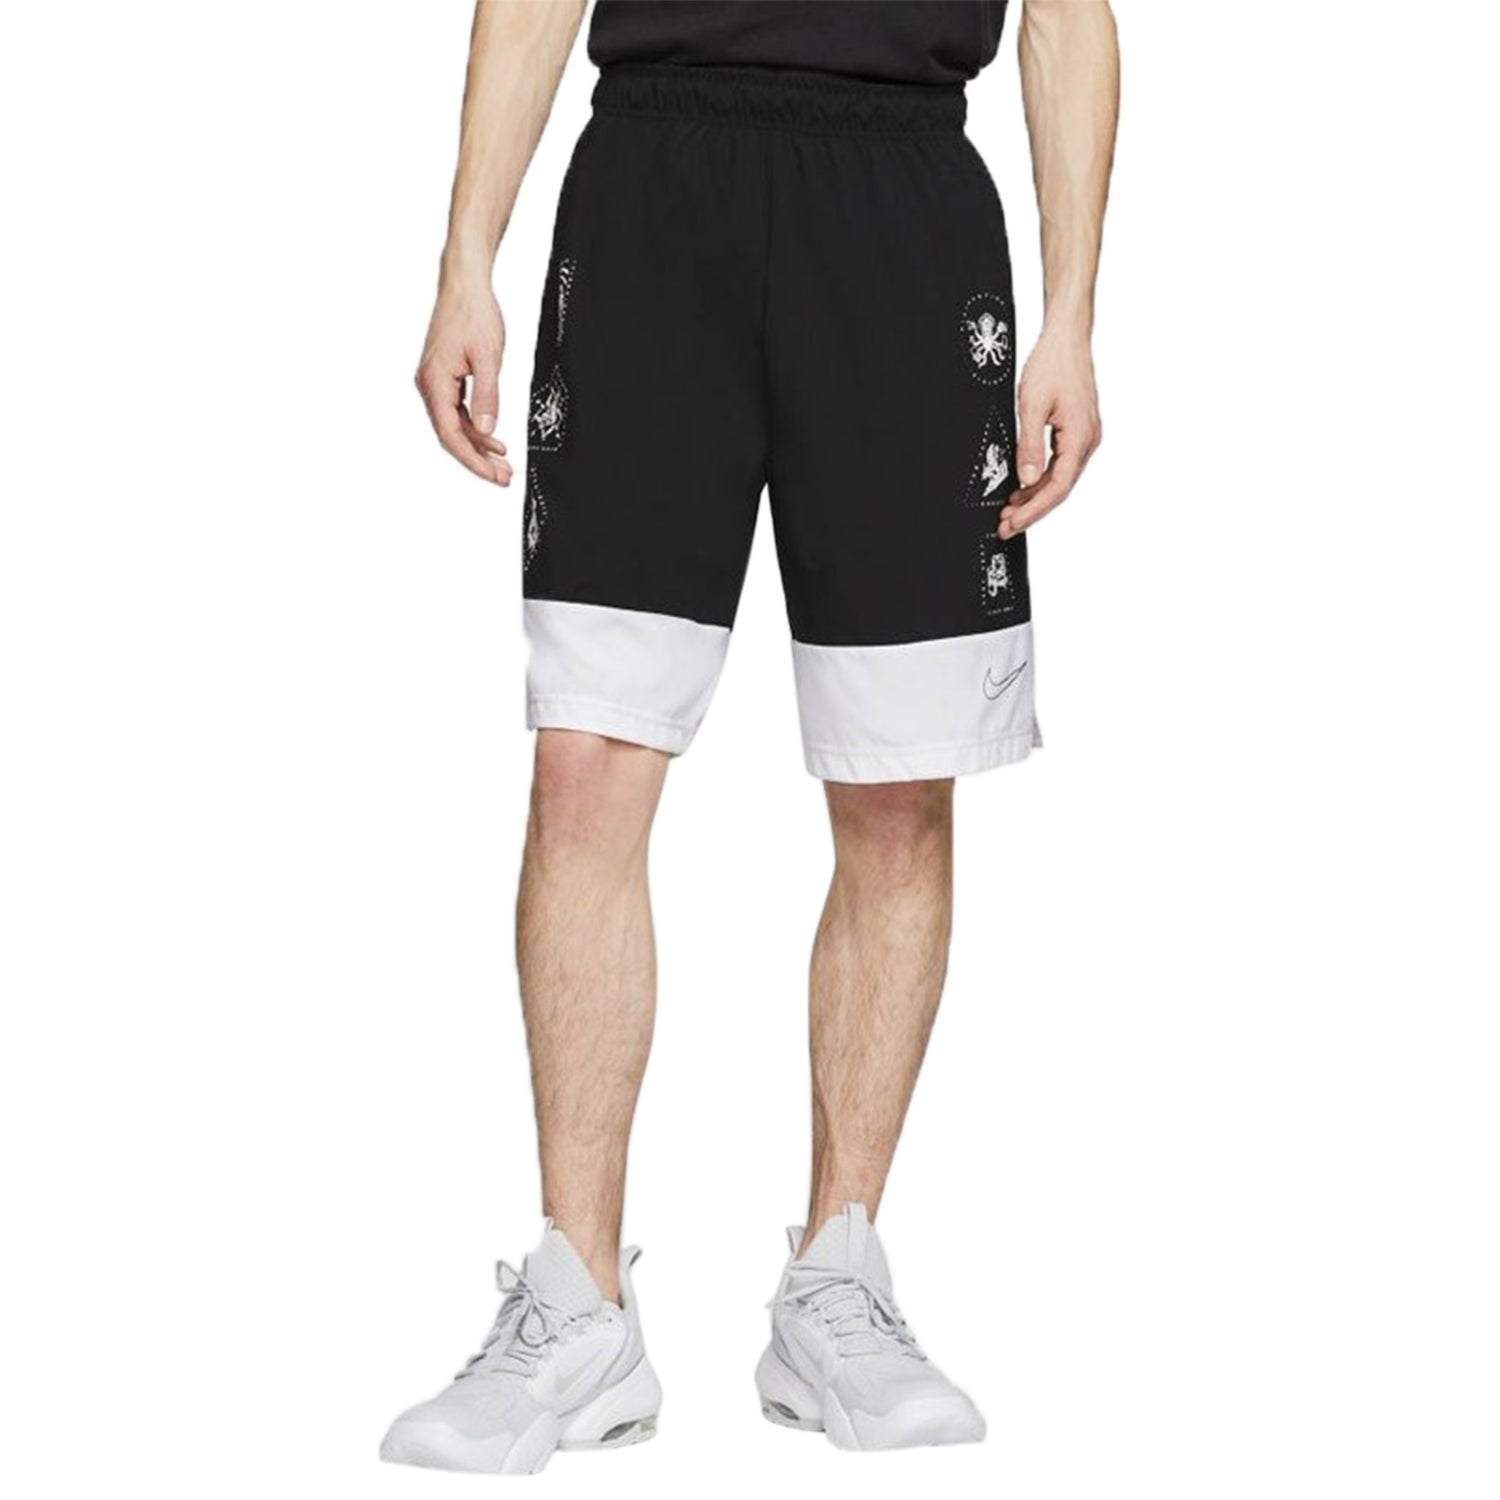 Adidas Dri-fit  Training Shorts Mens Style : Cj2390-010